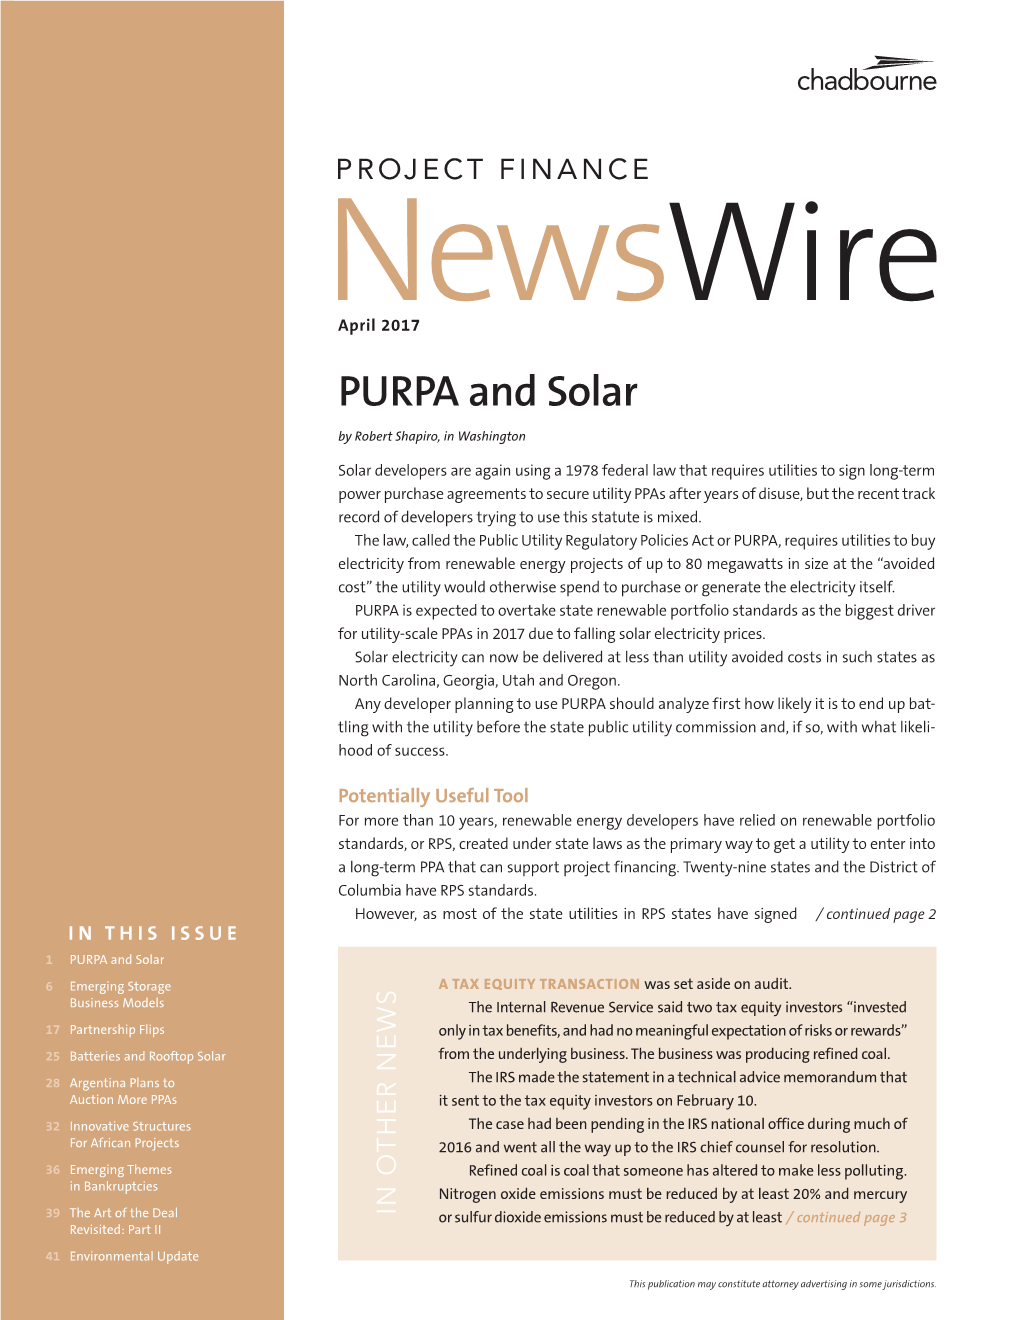 PURPA and Solar by Robert Shapiro, in Washington